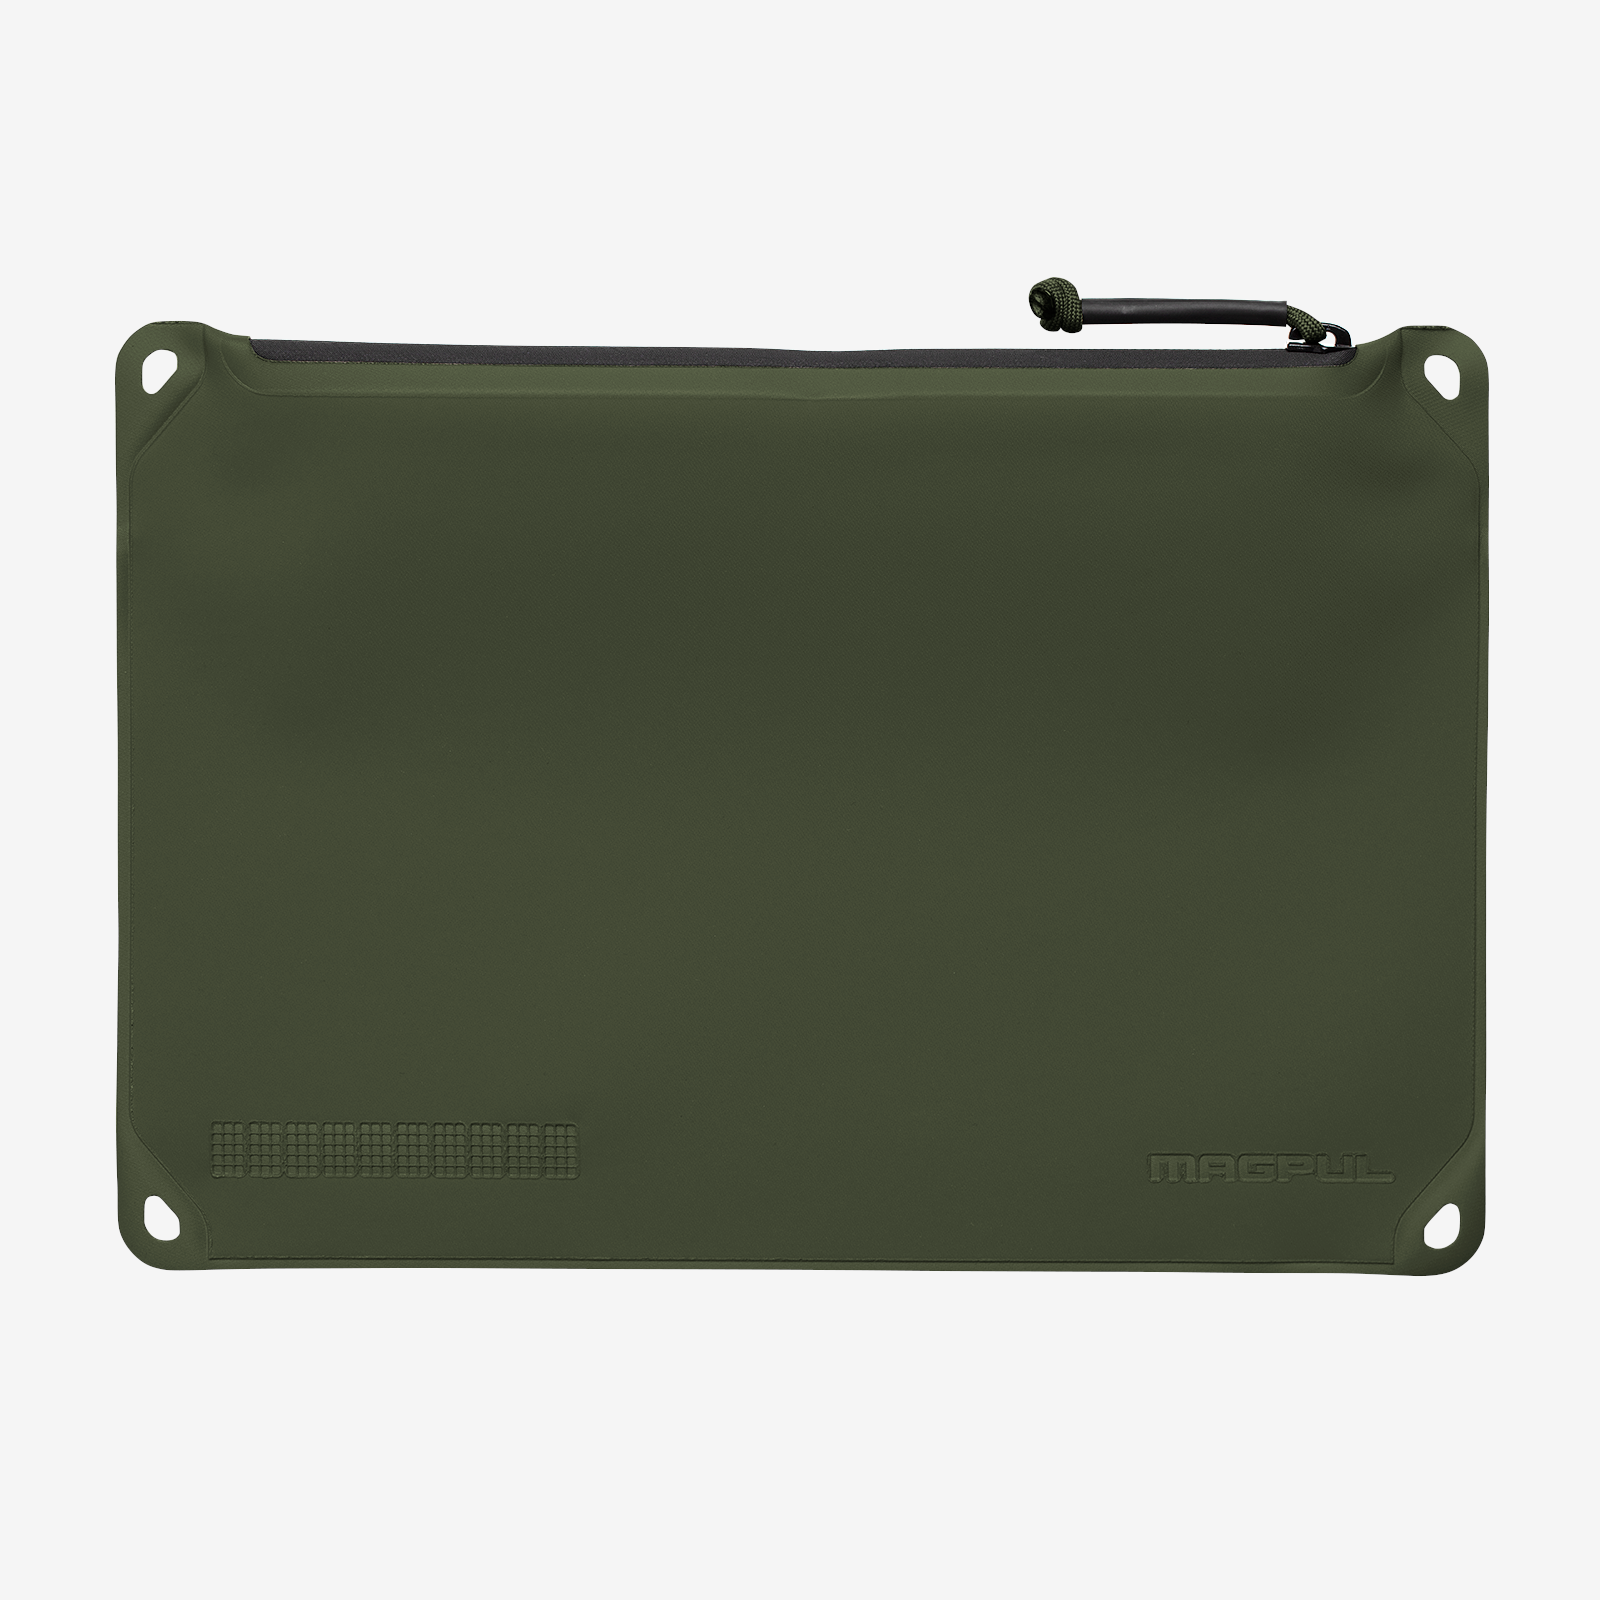 MAGPUL DAKA Window Pouch Olive Drab Green Accessories MAGPUL Tactical Gear Supplier Tactical Distributors Australia